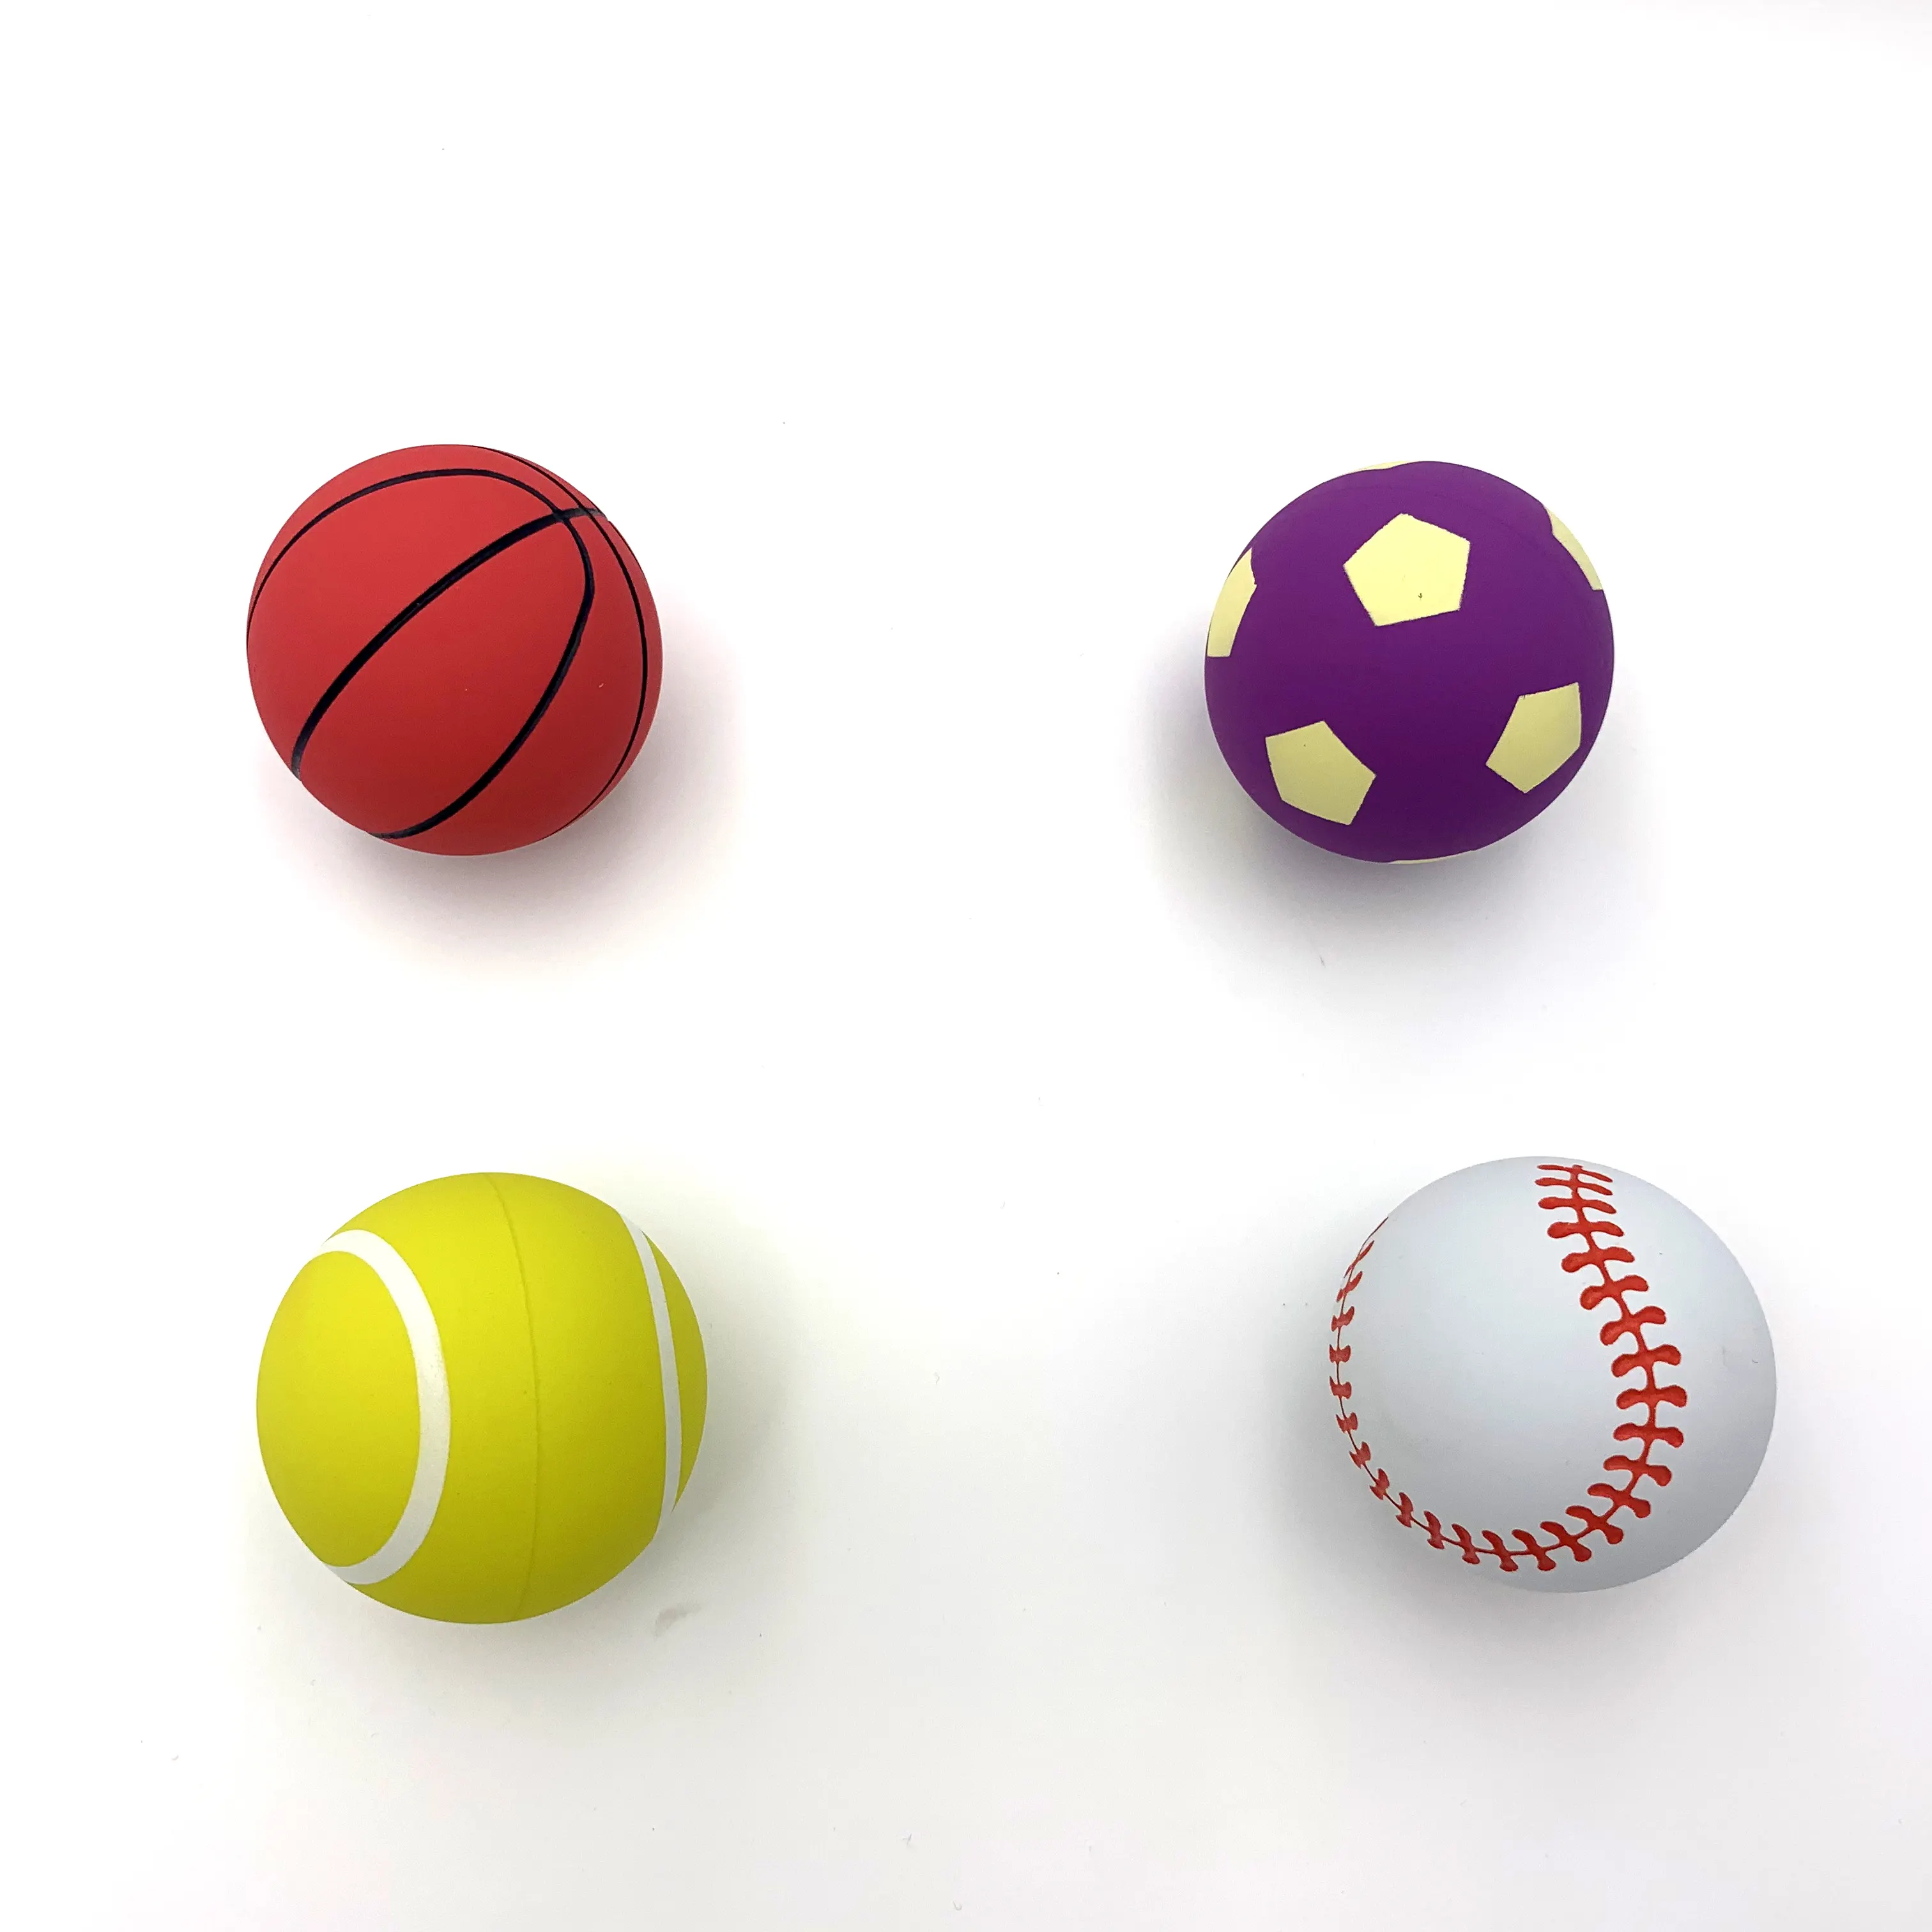 60 Mm Bouncing Yang Tinggi Sepak Bola/Basket/Baseball/Bola Tenis Olahraga Desain Warna Karet Melenting Bola Anak mainan Bola Tangan